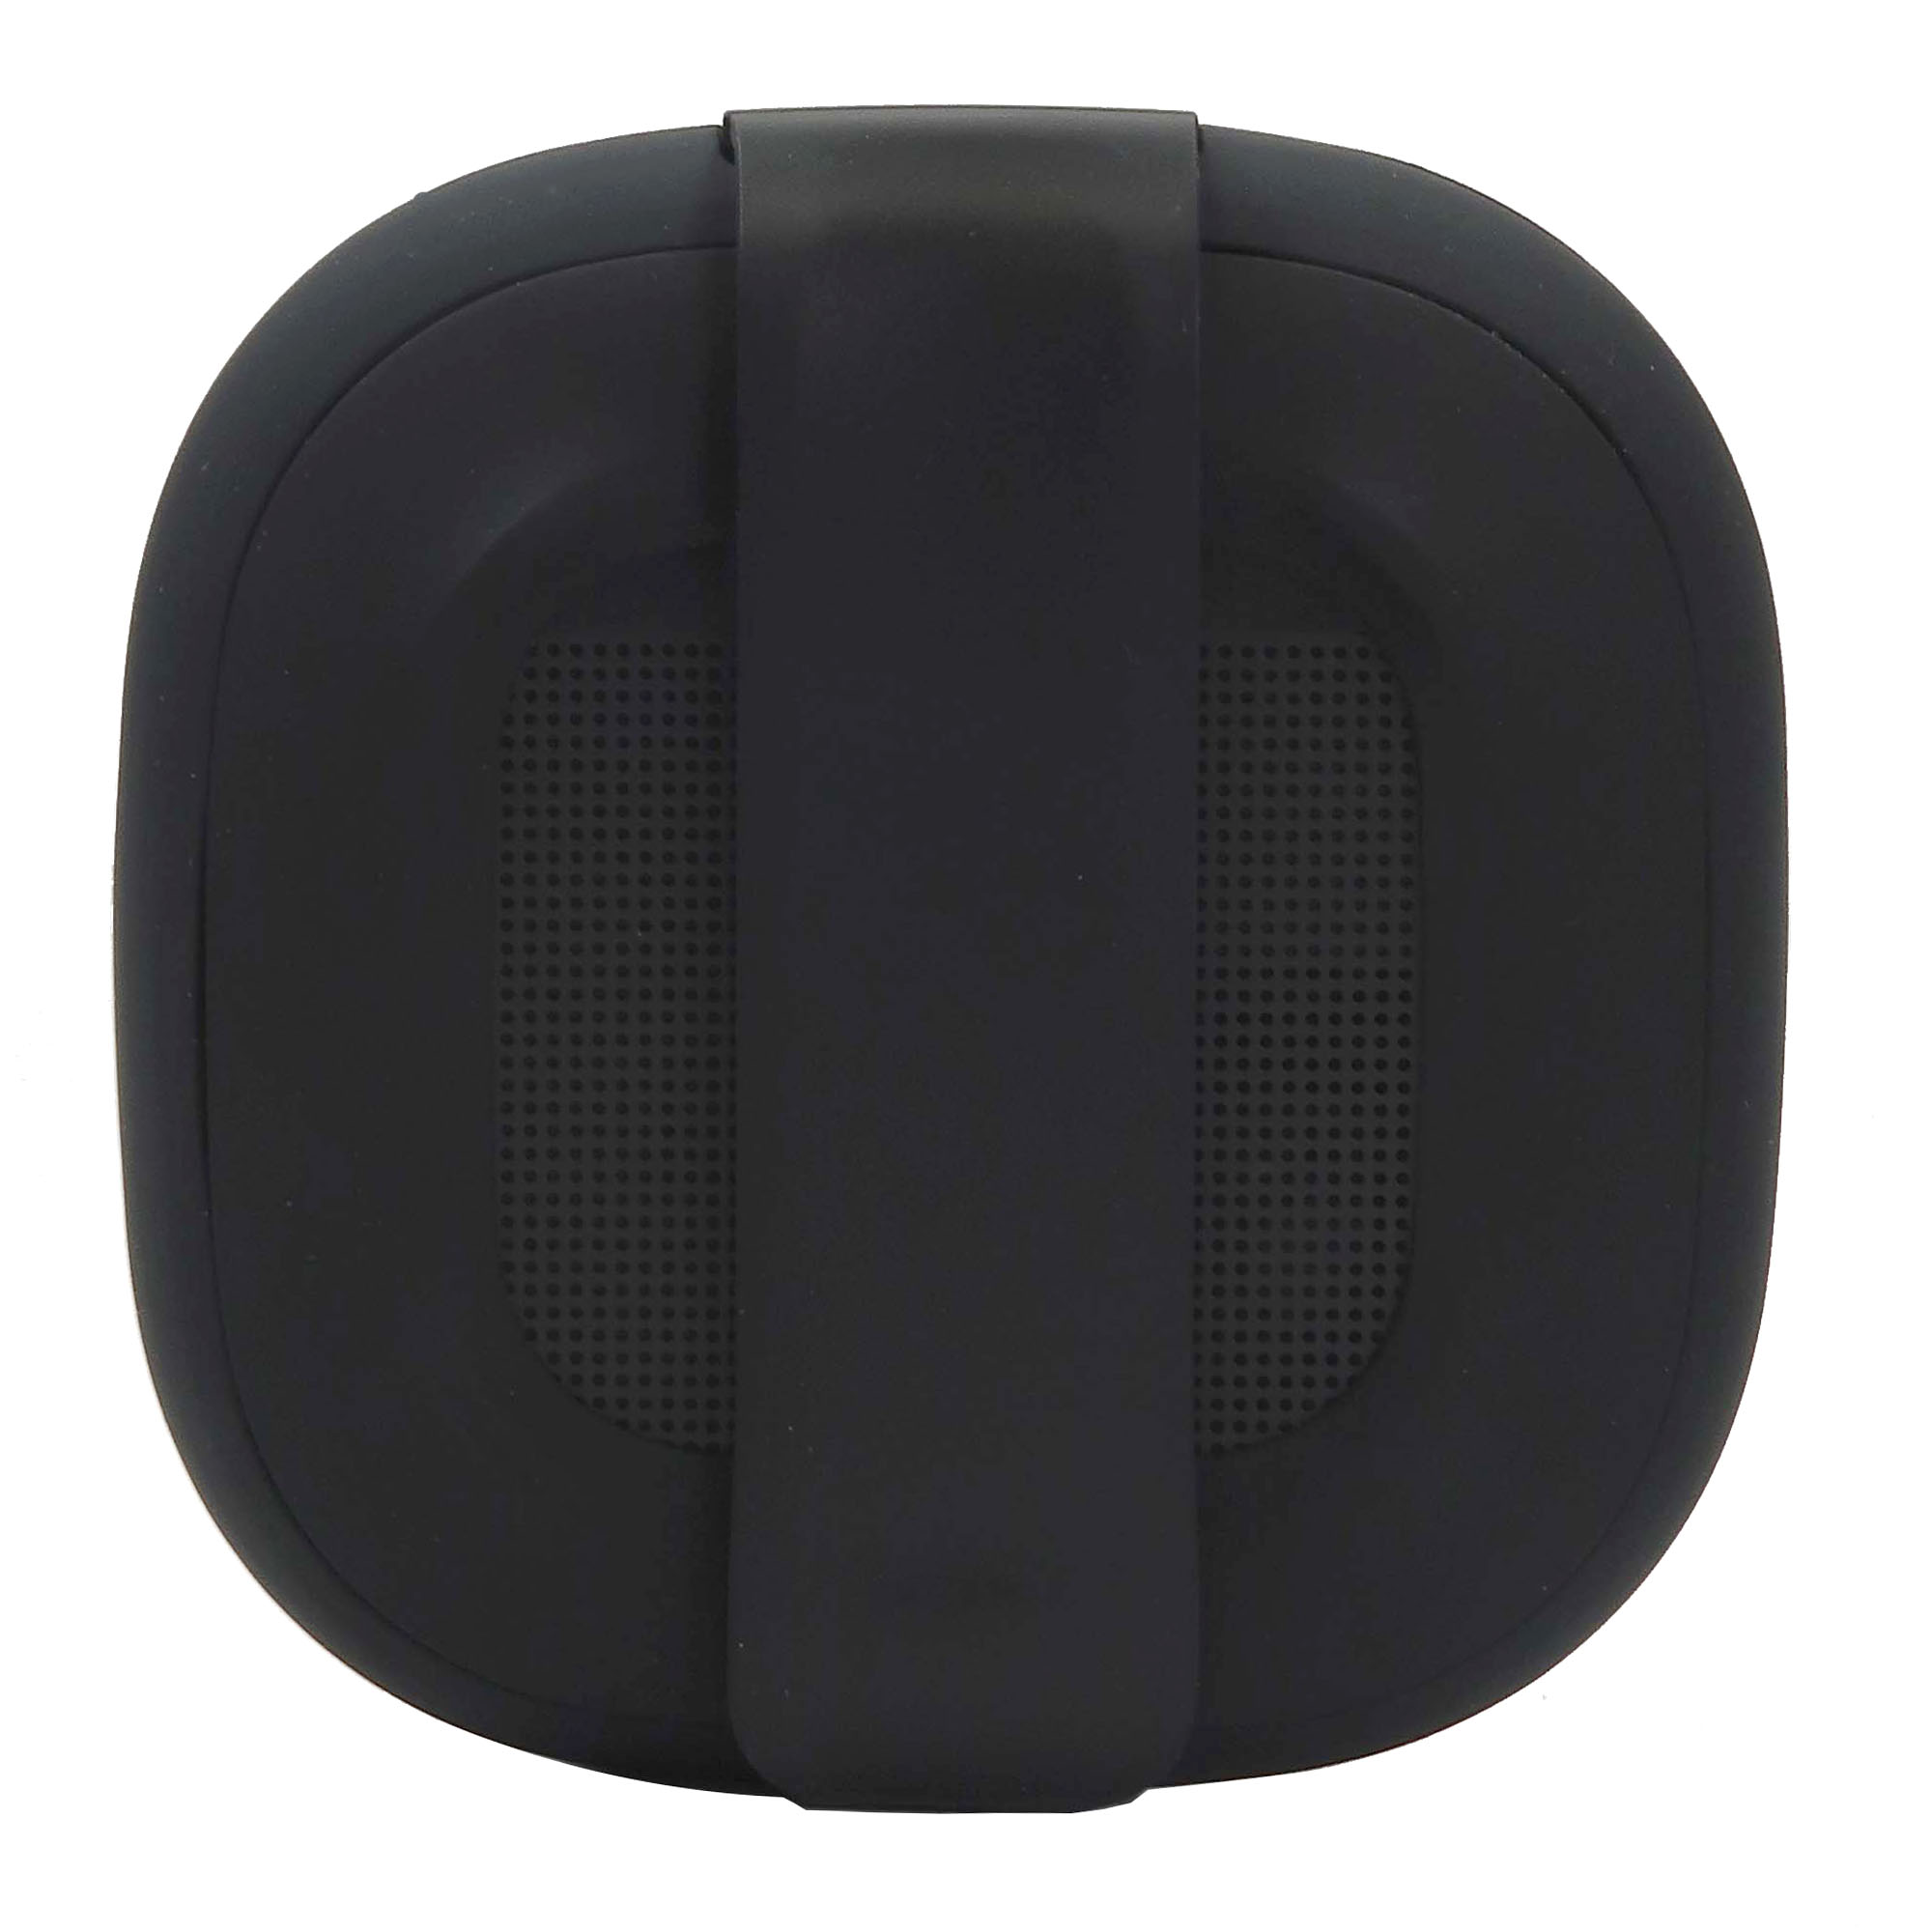 Bose Soundlink Micro Bluetooth Speaker (Black) 17817768429 | eBay